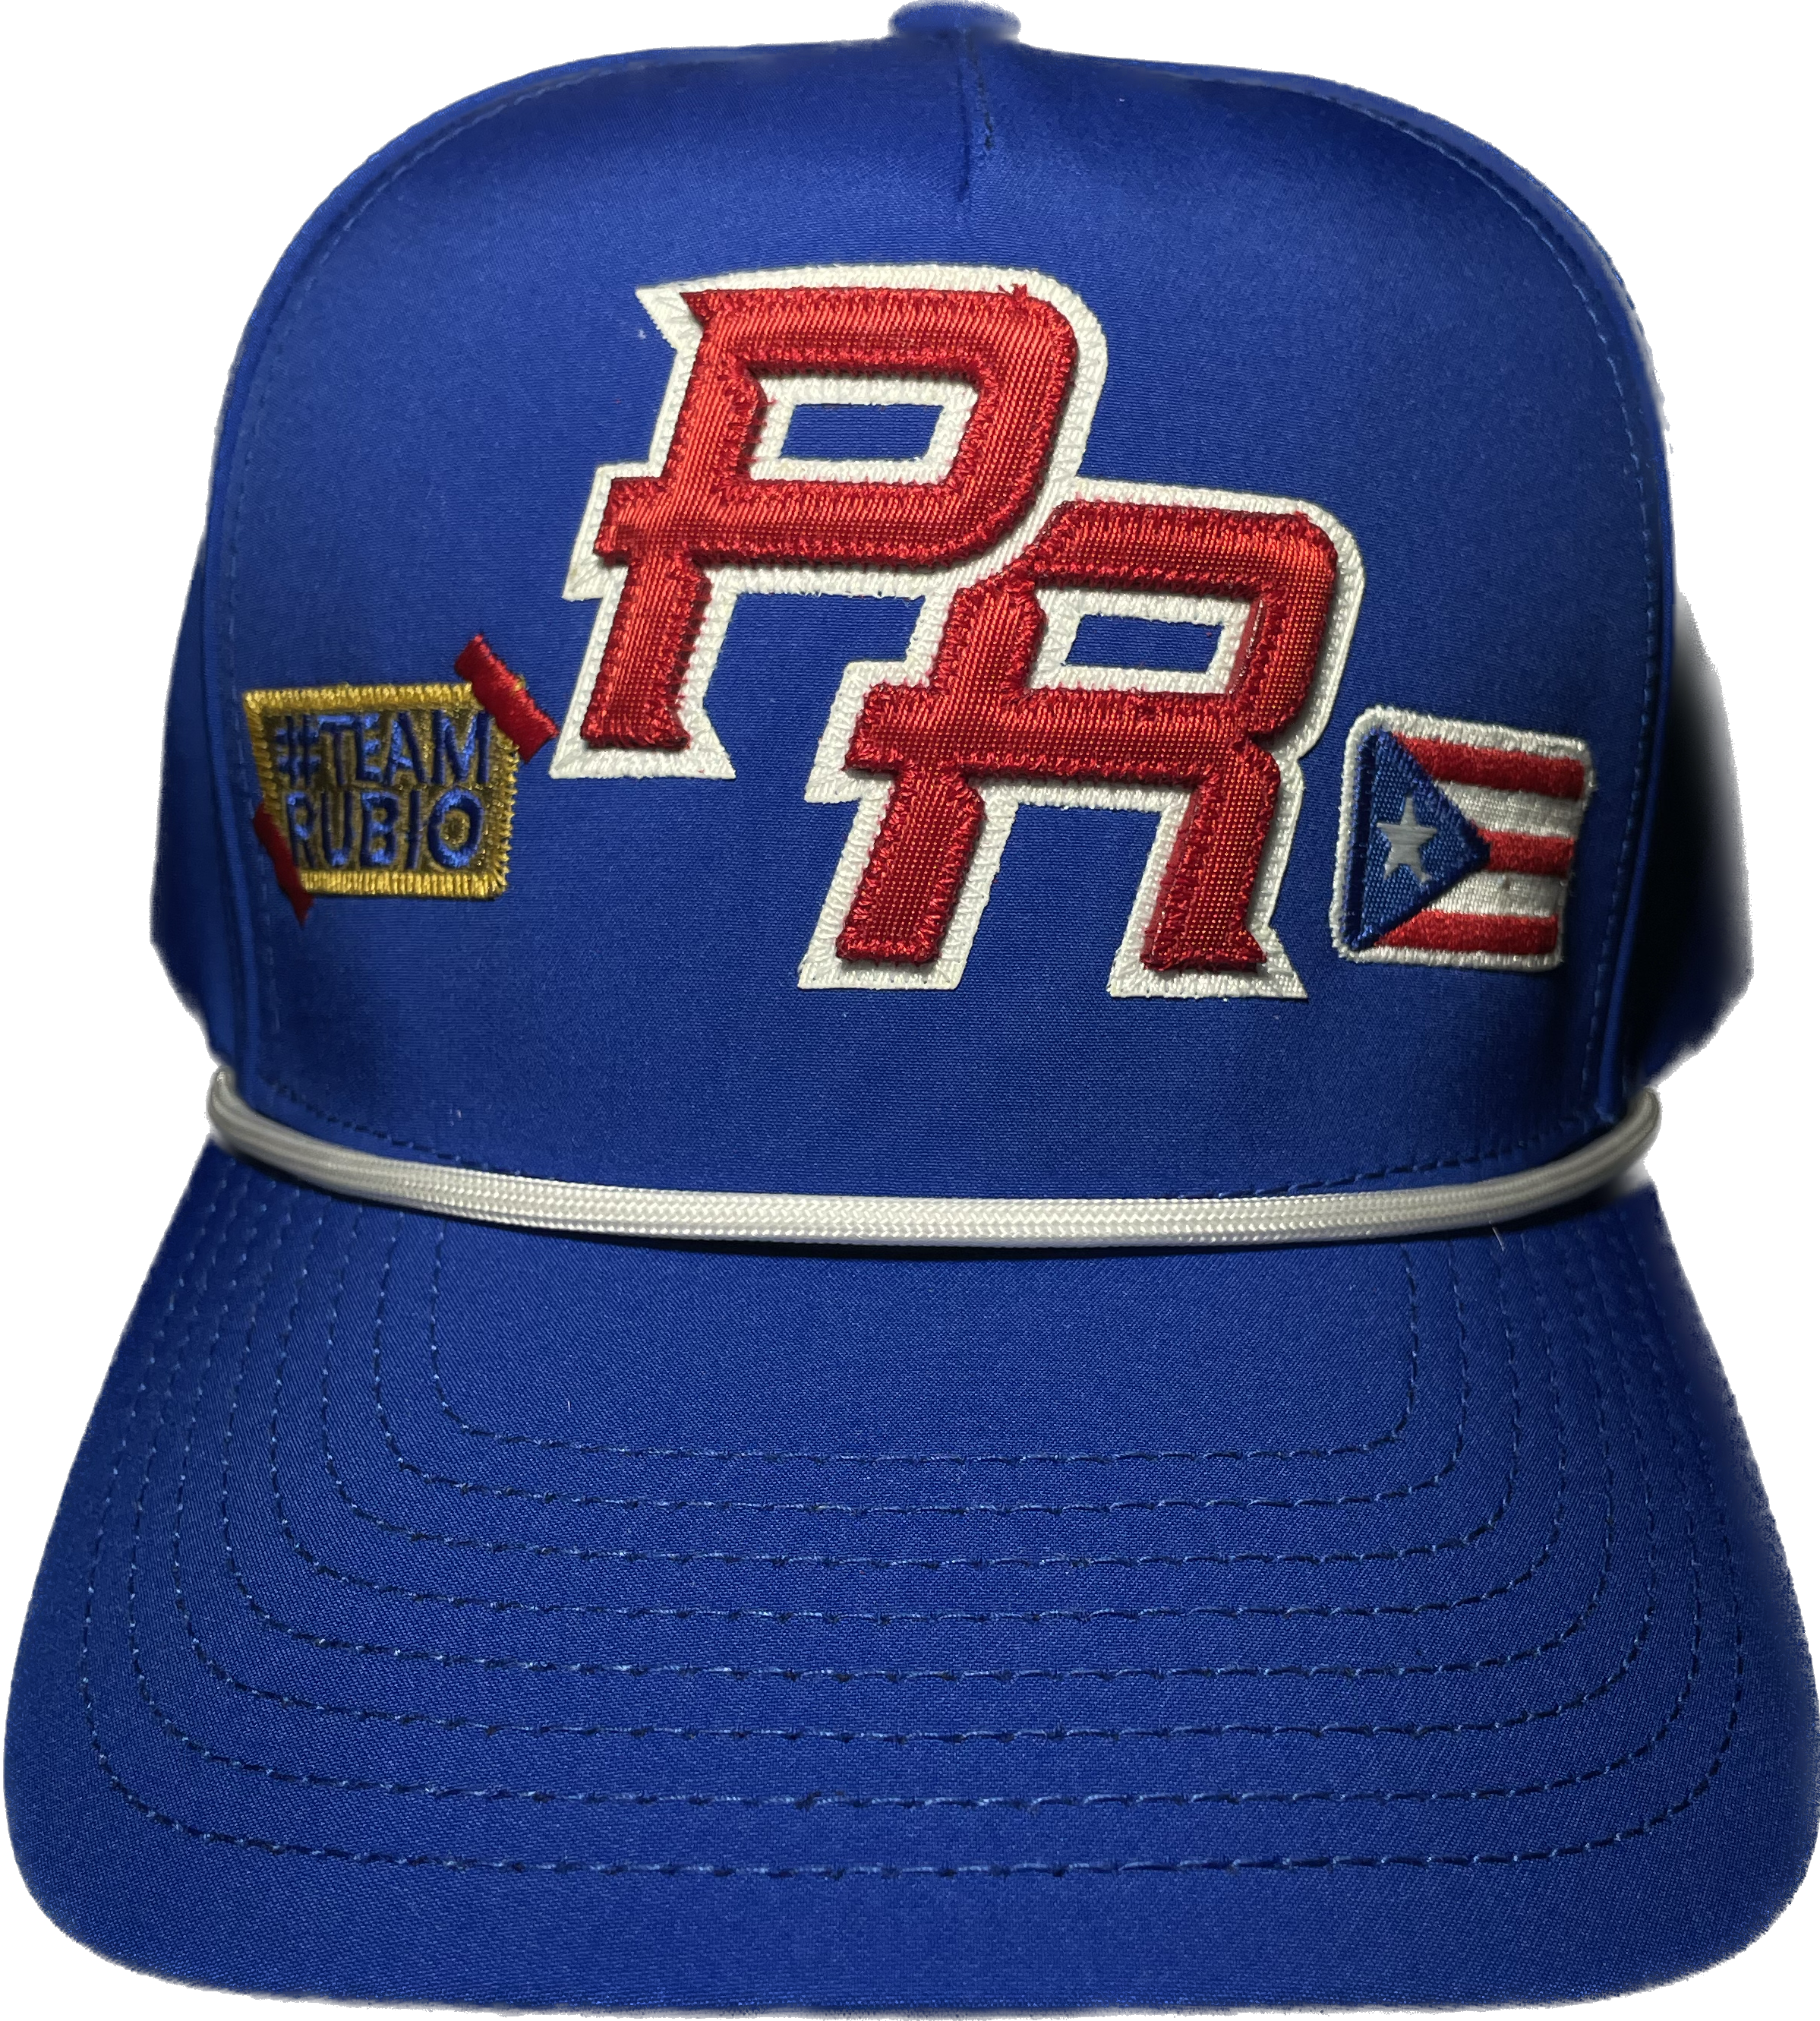 PR Team Rubio Royal Cap